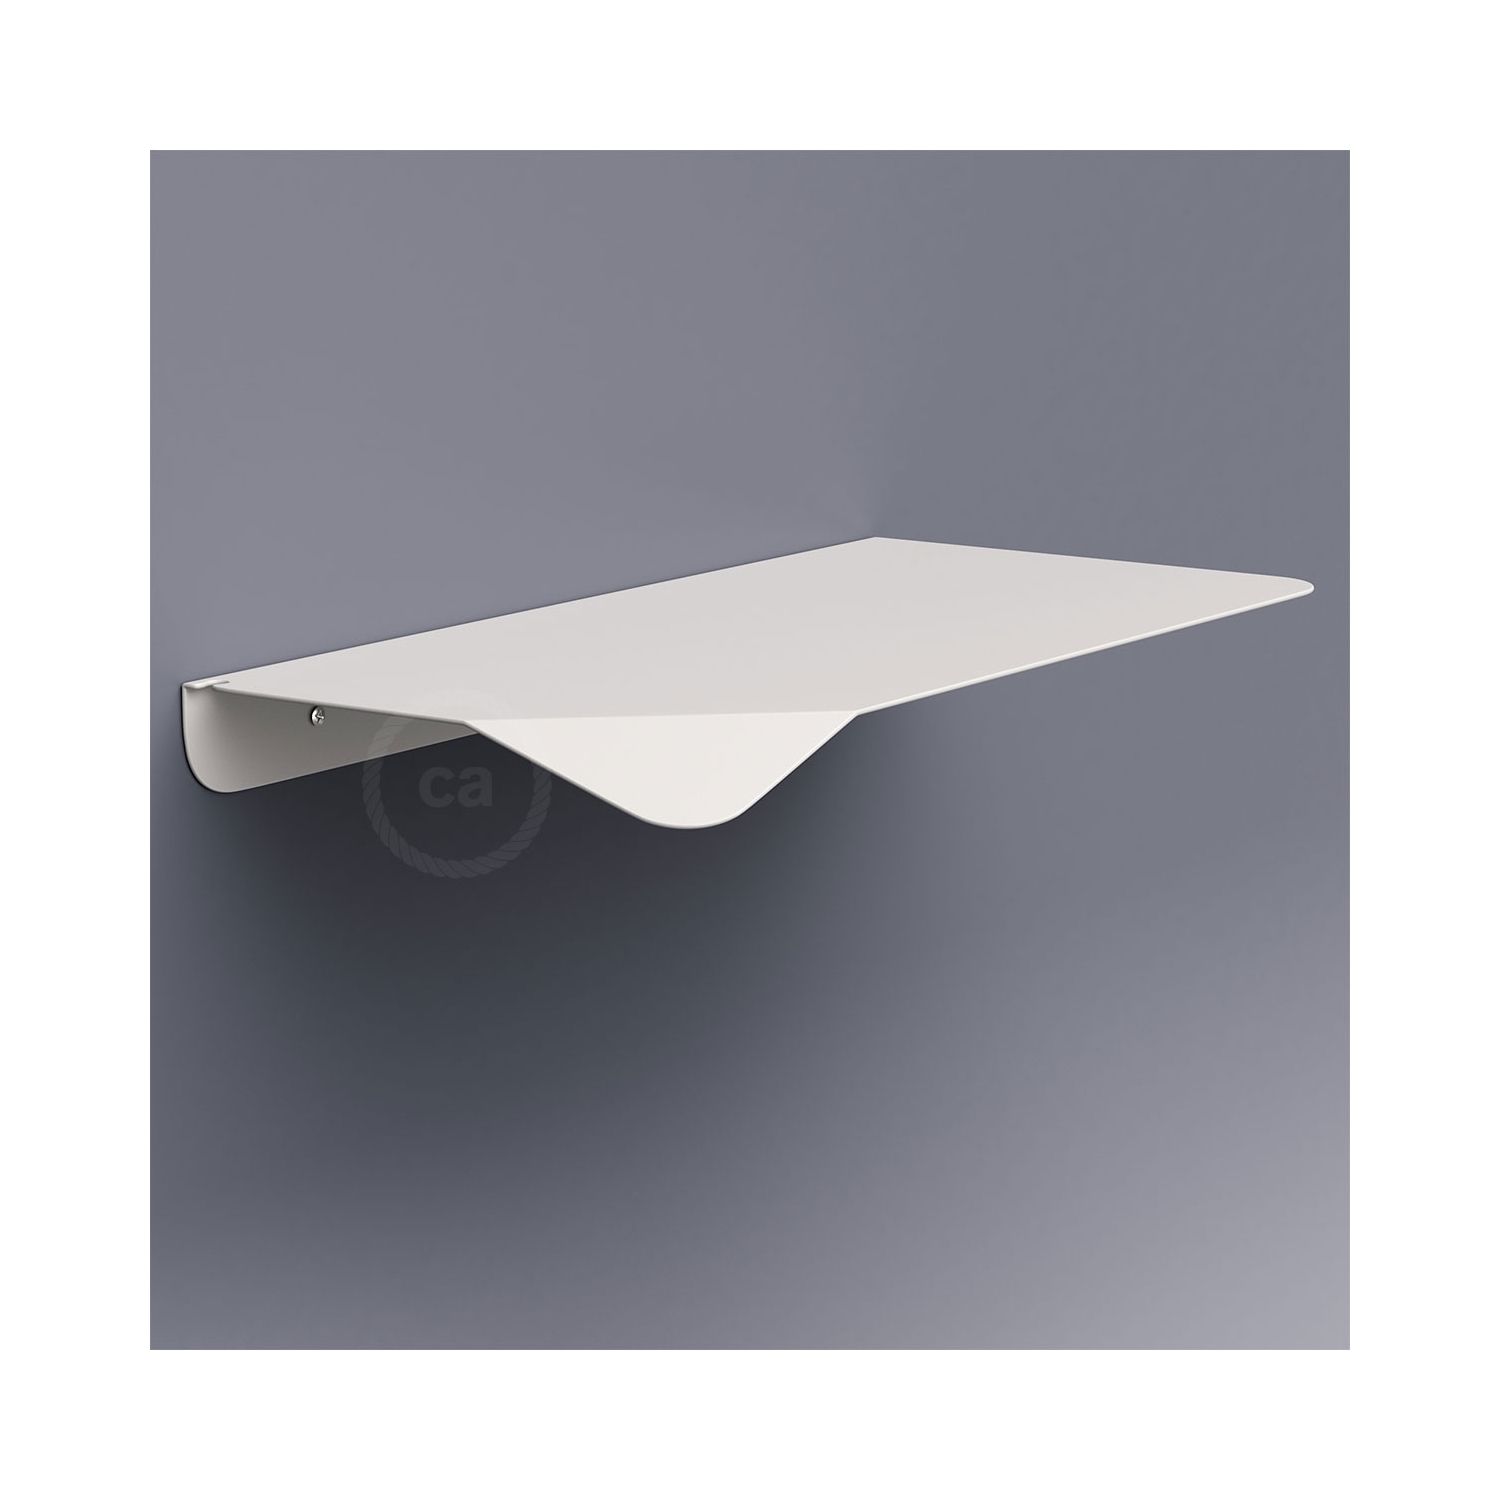 Magnetico®-Shelf White, metal shelf for Magnetico®-Plug